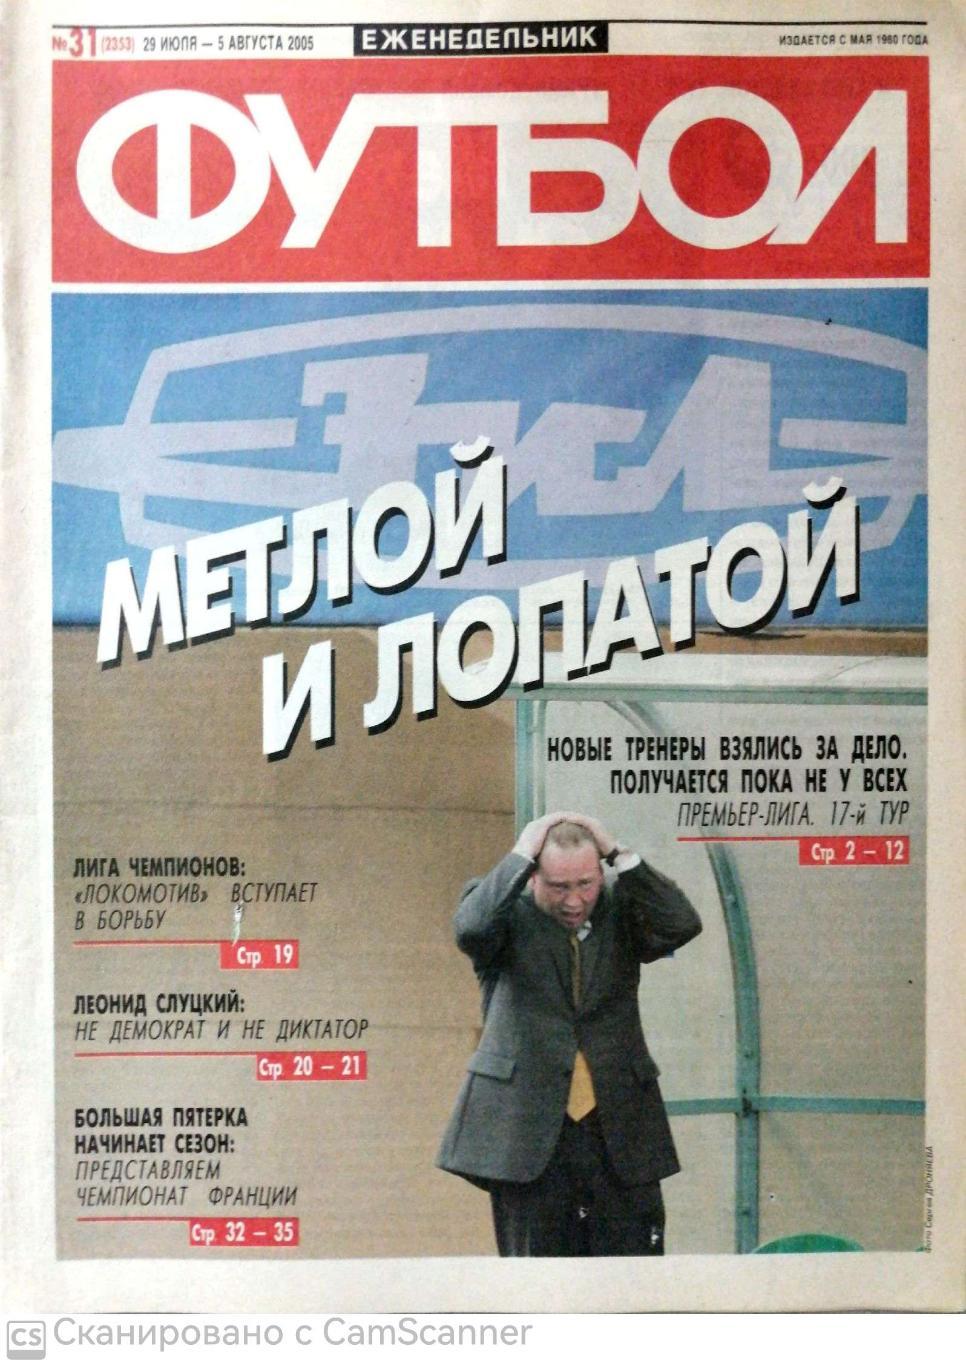 Еженедельник «Футбол» (Москва). 2005 год. №31